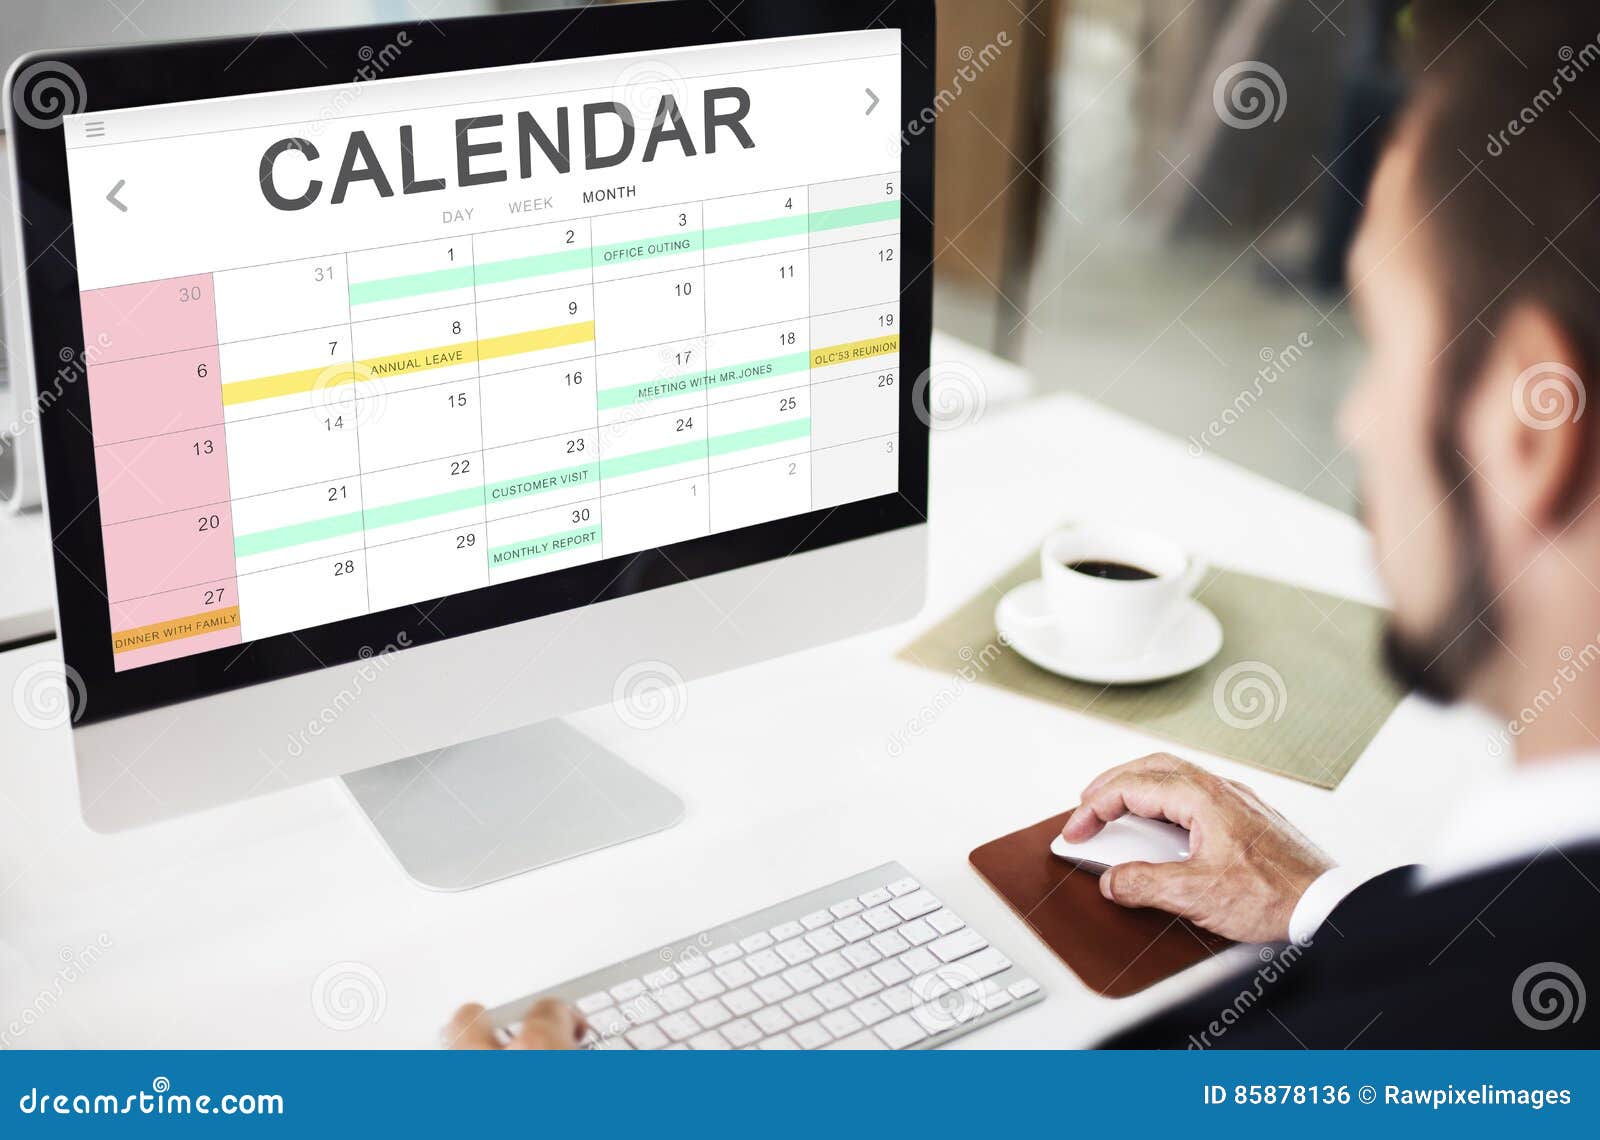 calendar agenda event meeting reminder schedule graphic concept